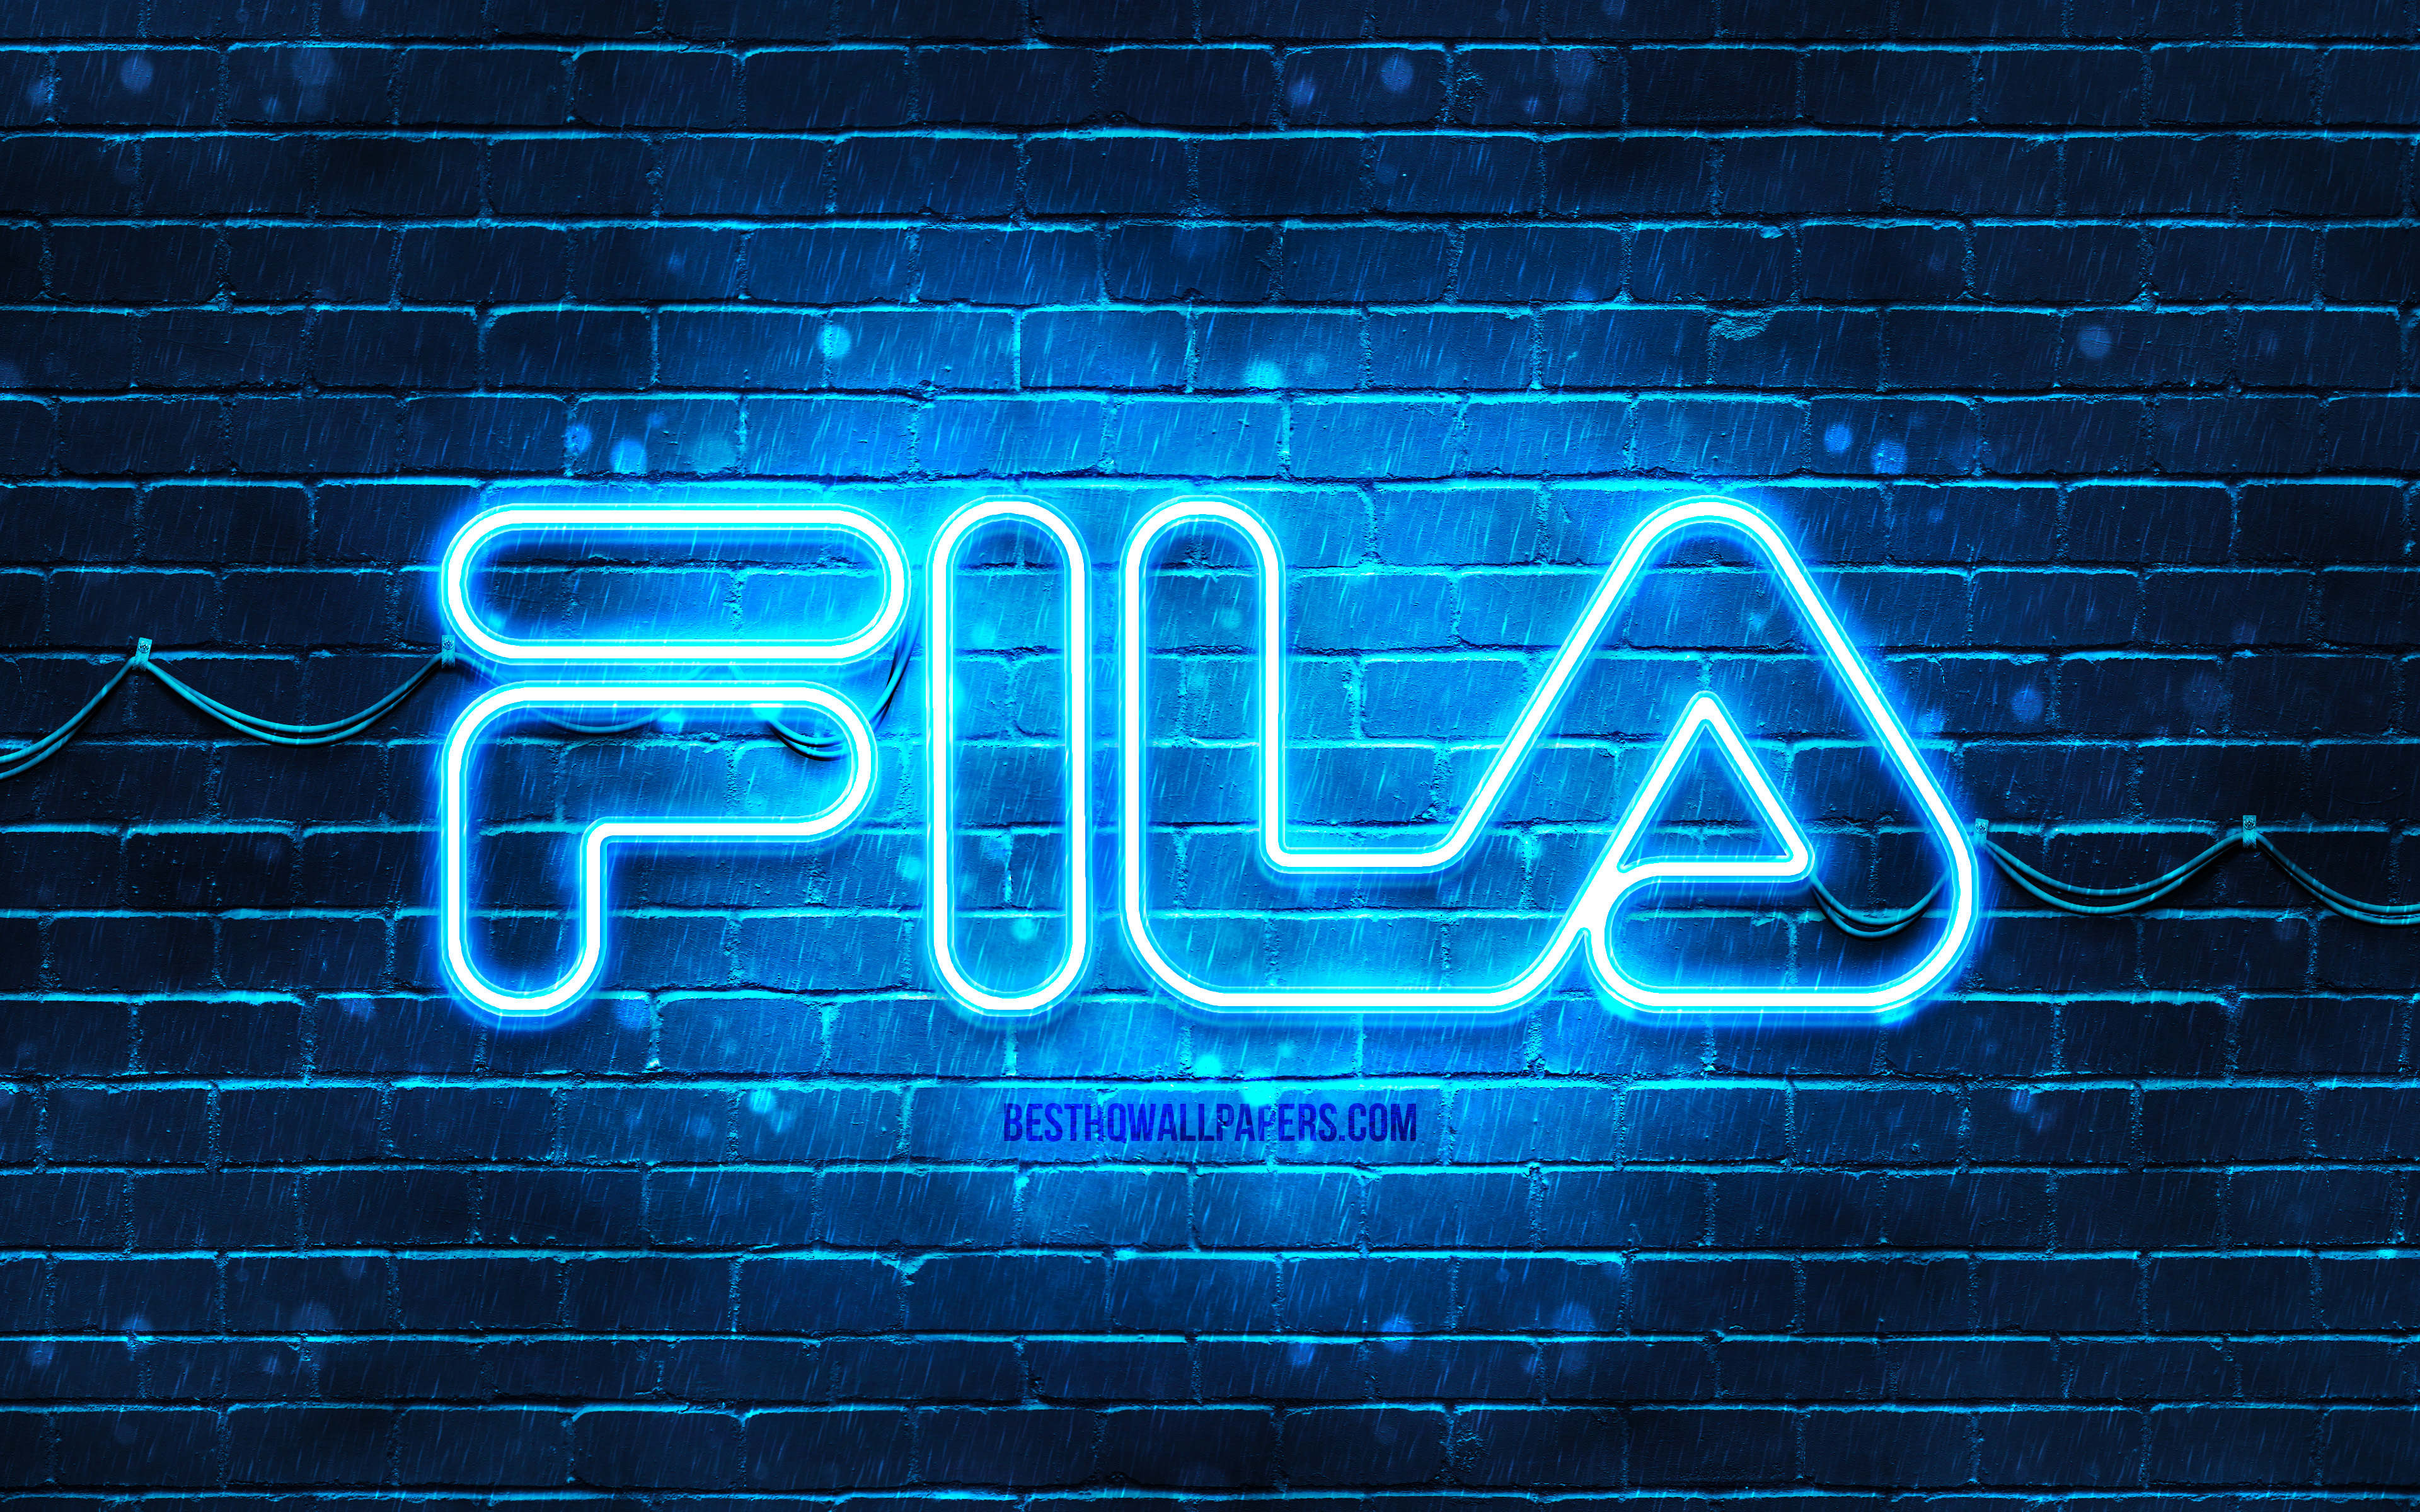 Download wallpaper Fila blue logo, 4k, blue brickwall, Fila logo, brands, Fila neon logo, Fila for desktop with resolution 3840x2400. High Quality HD picture wallpaper